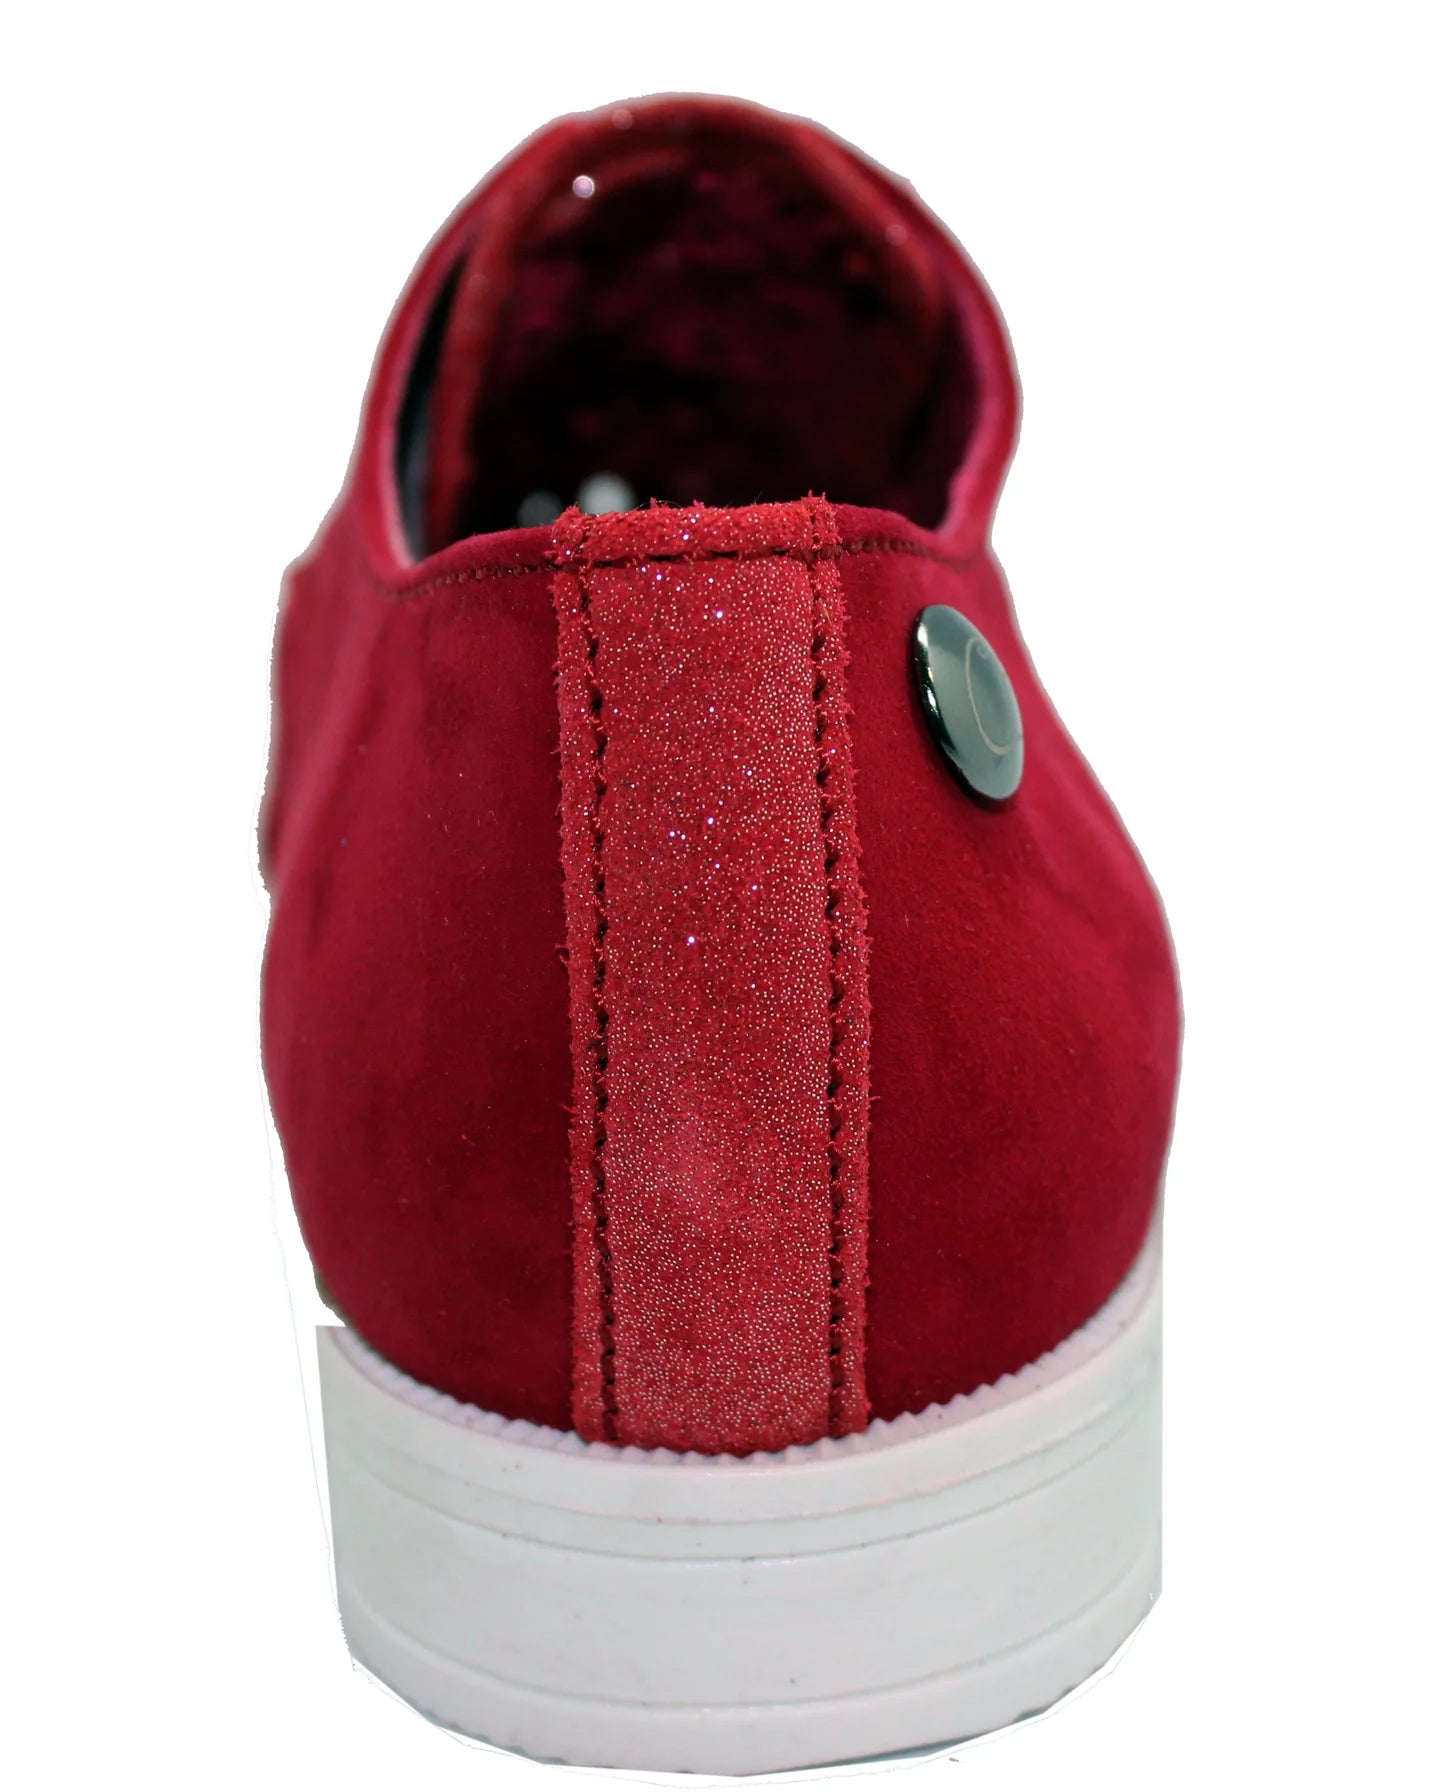 Chanii B "Cordon" Red - Suede Sneaker